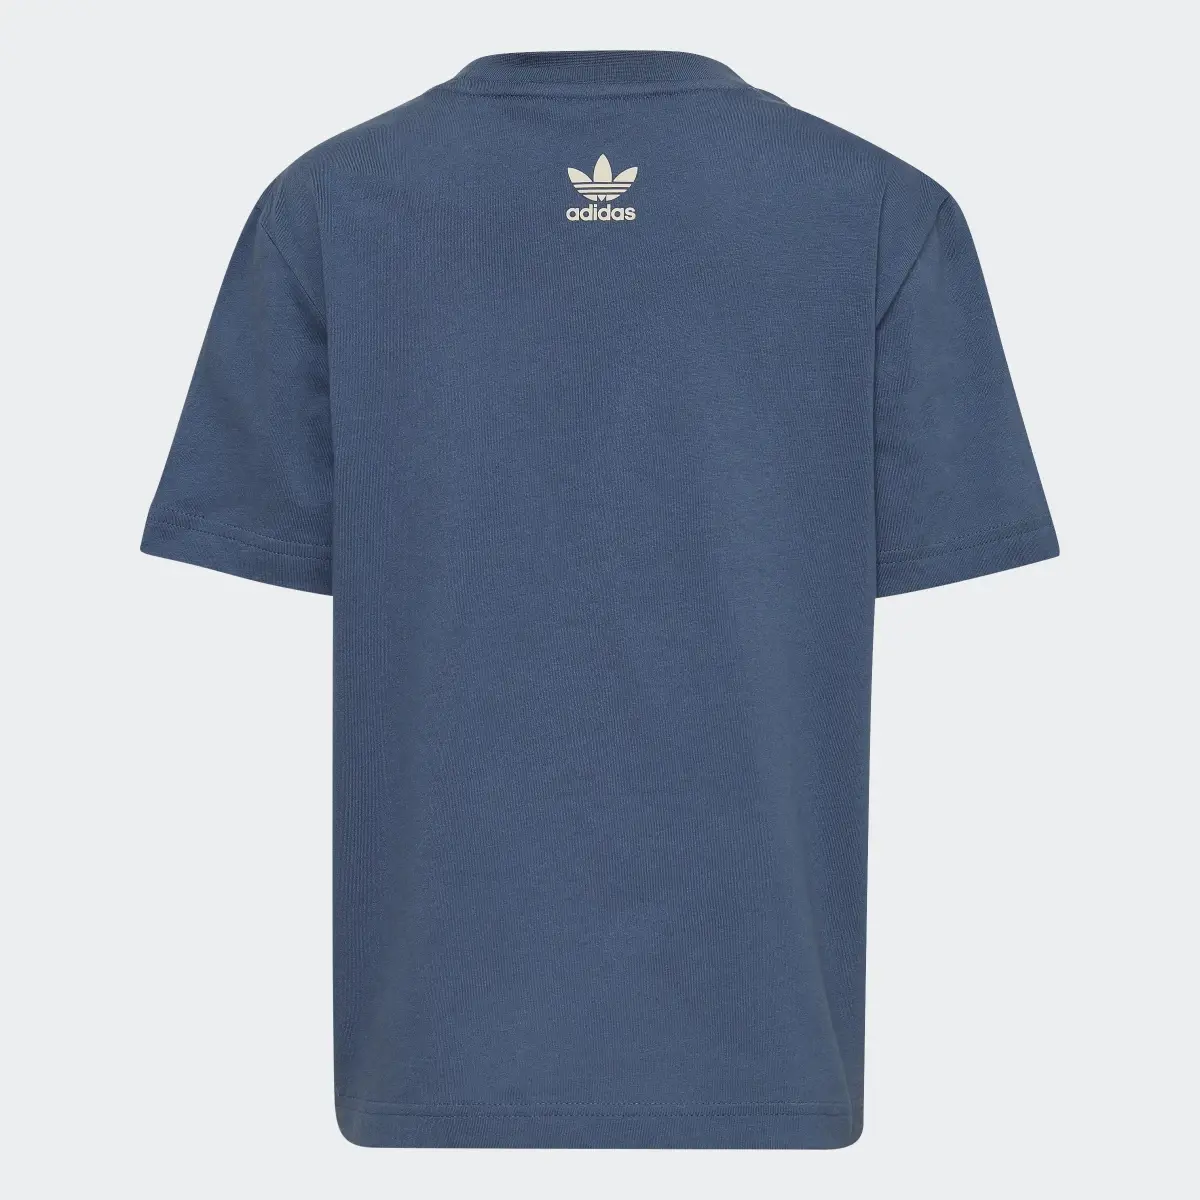 Adidas T-shirt. 2